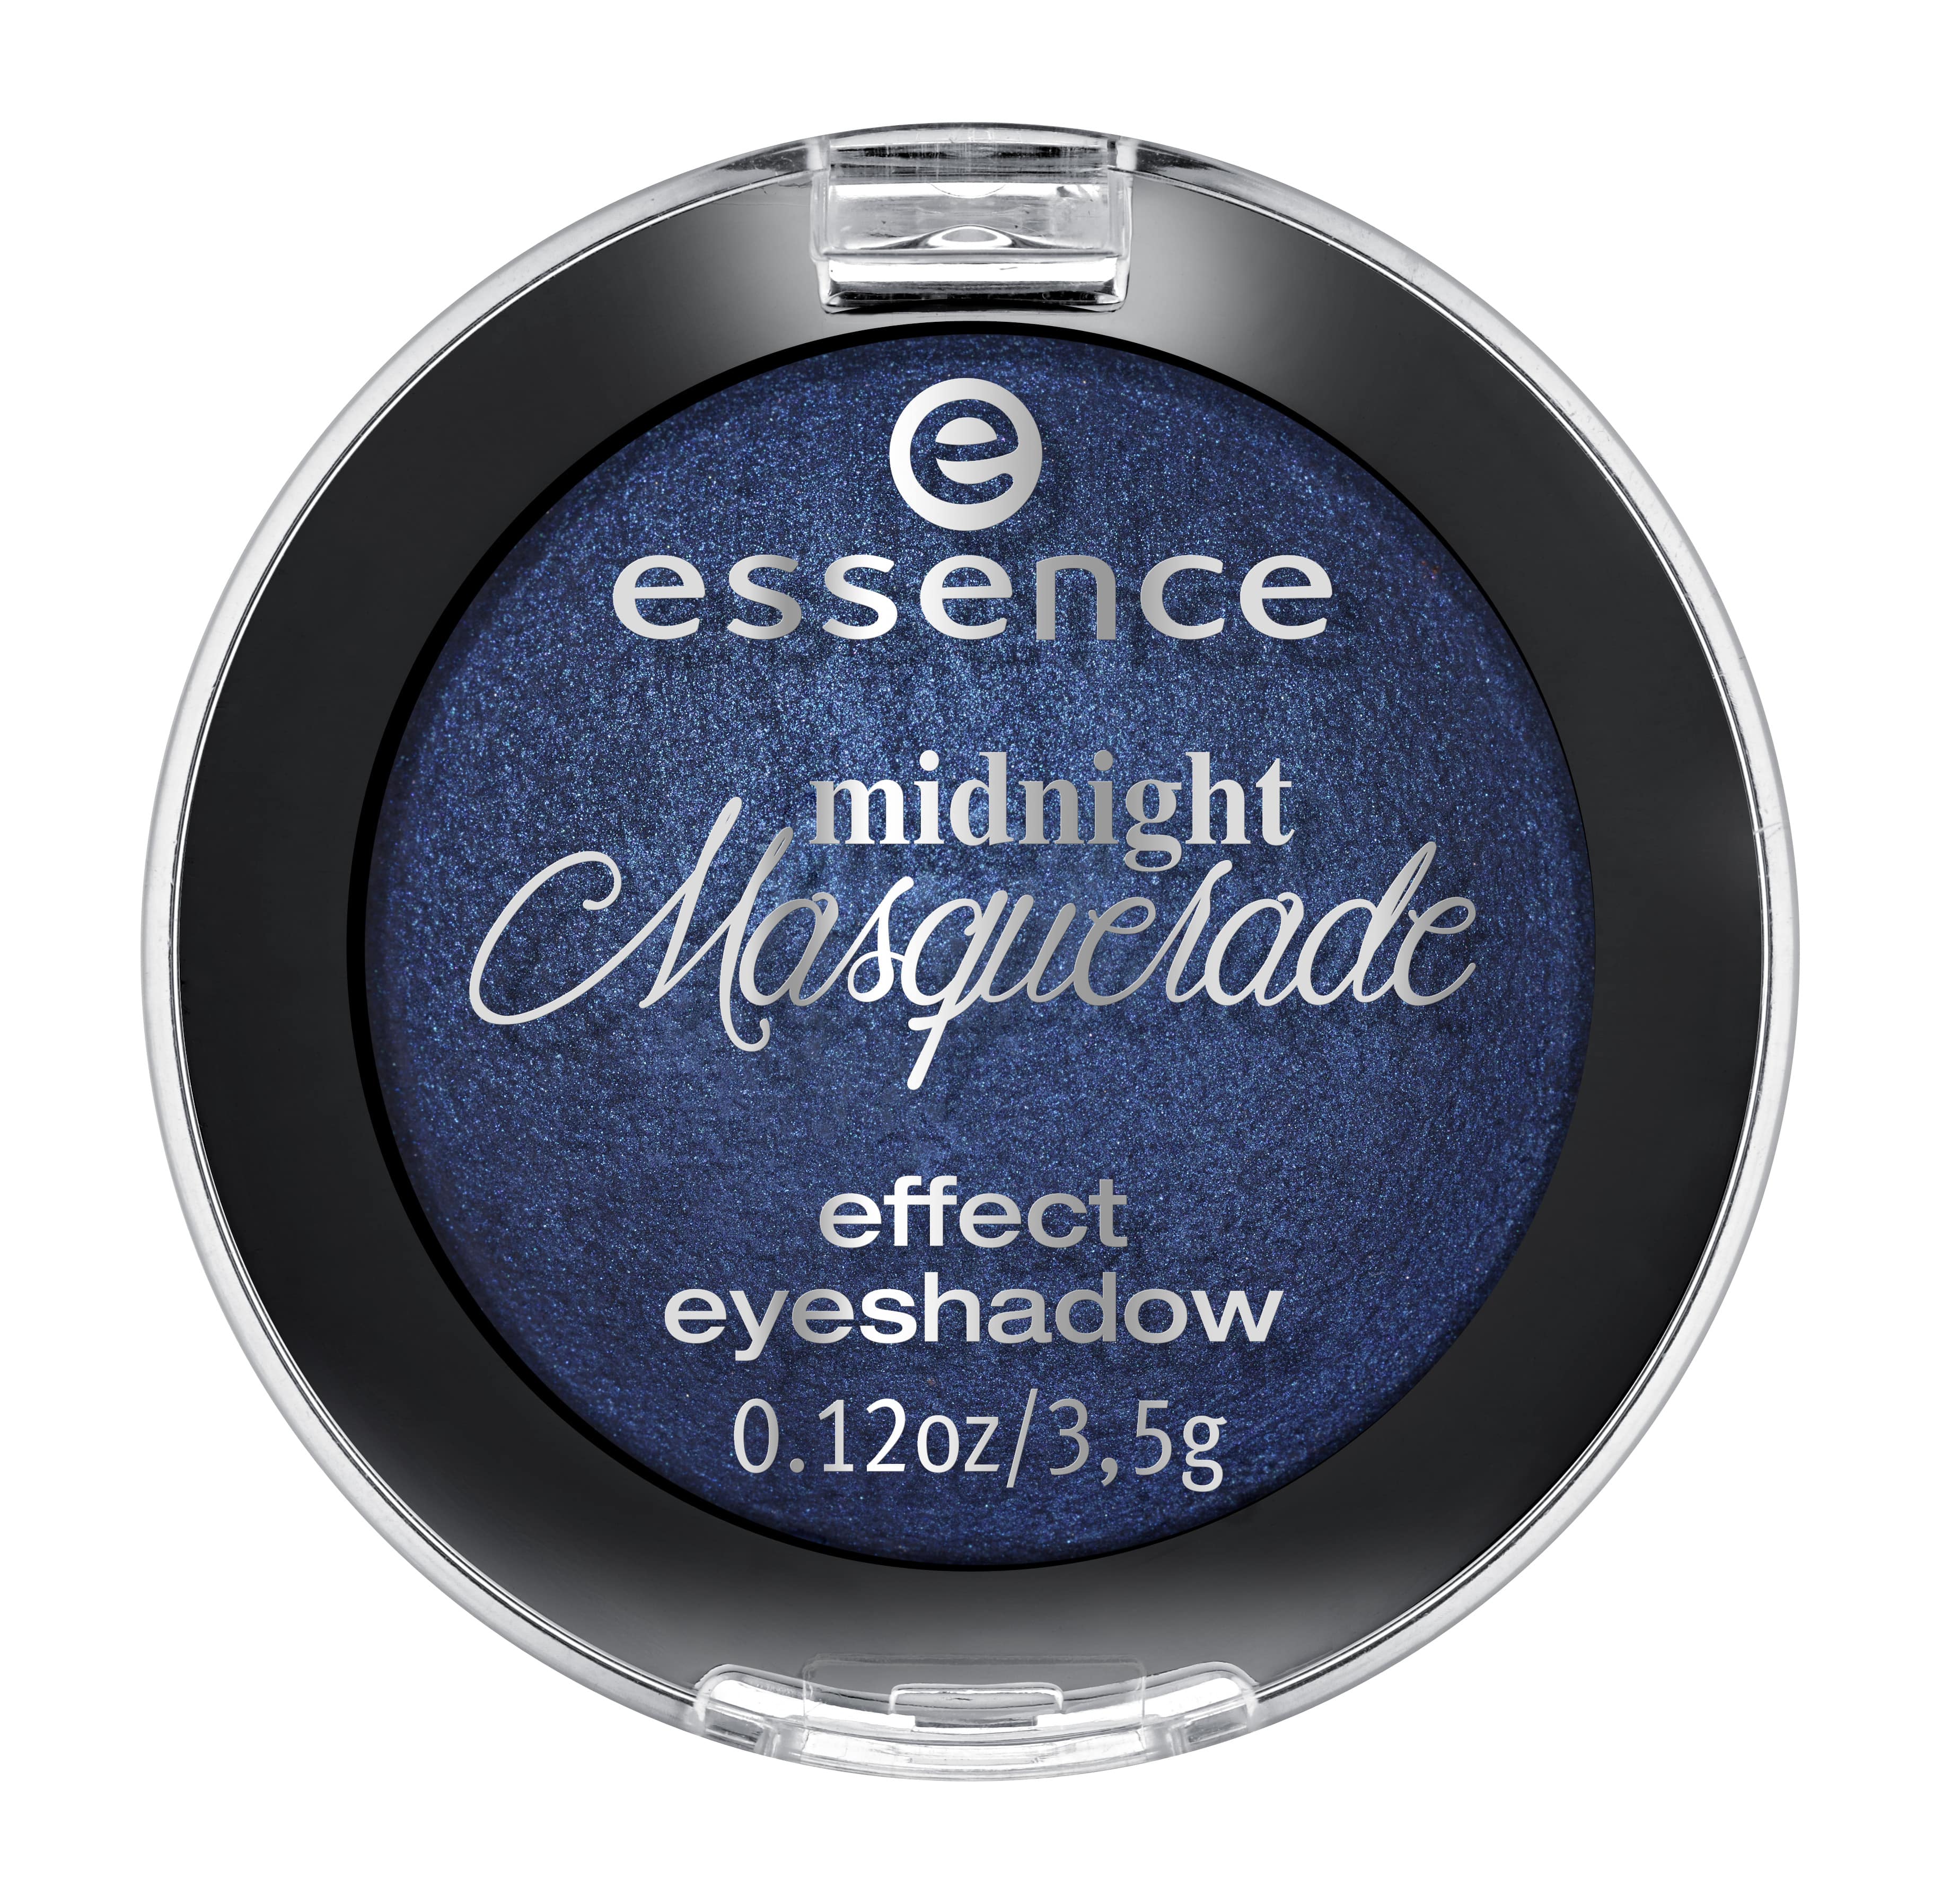 Тени эссенс. Тени Эссенс 01. Essence тени для век 01. Тени Essence Effect Eyeshadow. Лимитка Эссенс тени.